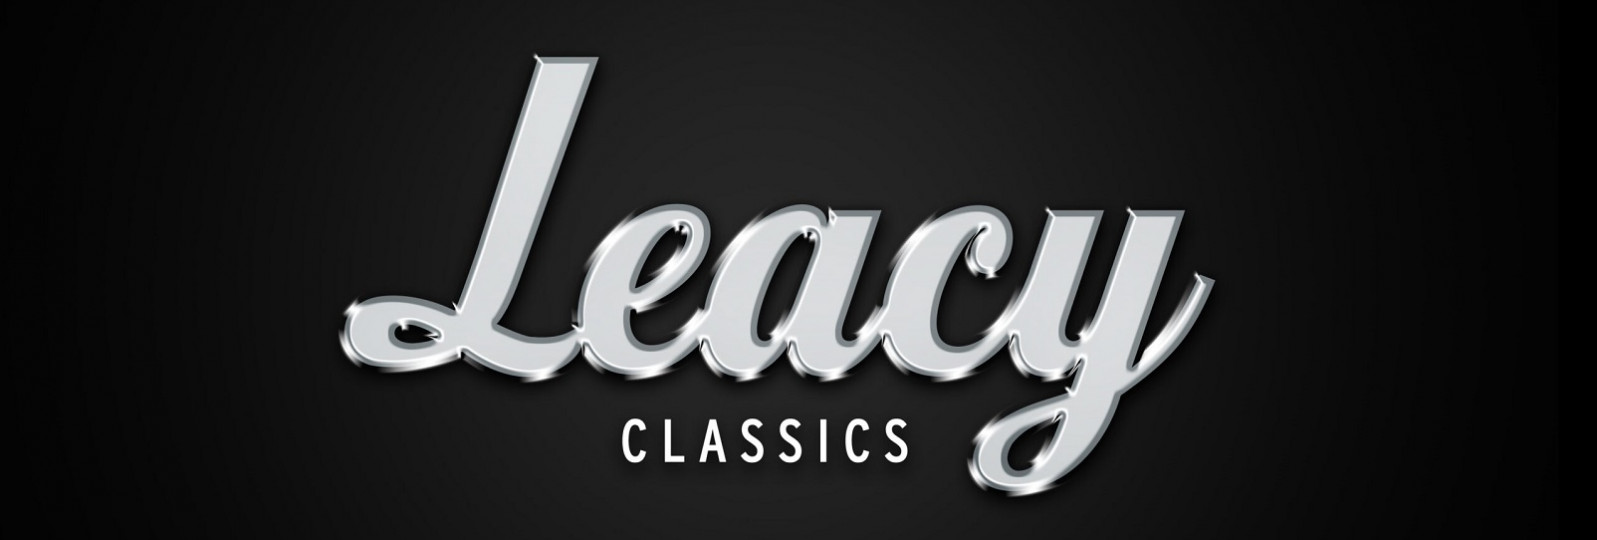 Leacy Classics: Founding member of Motaclan